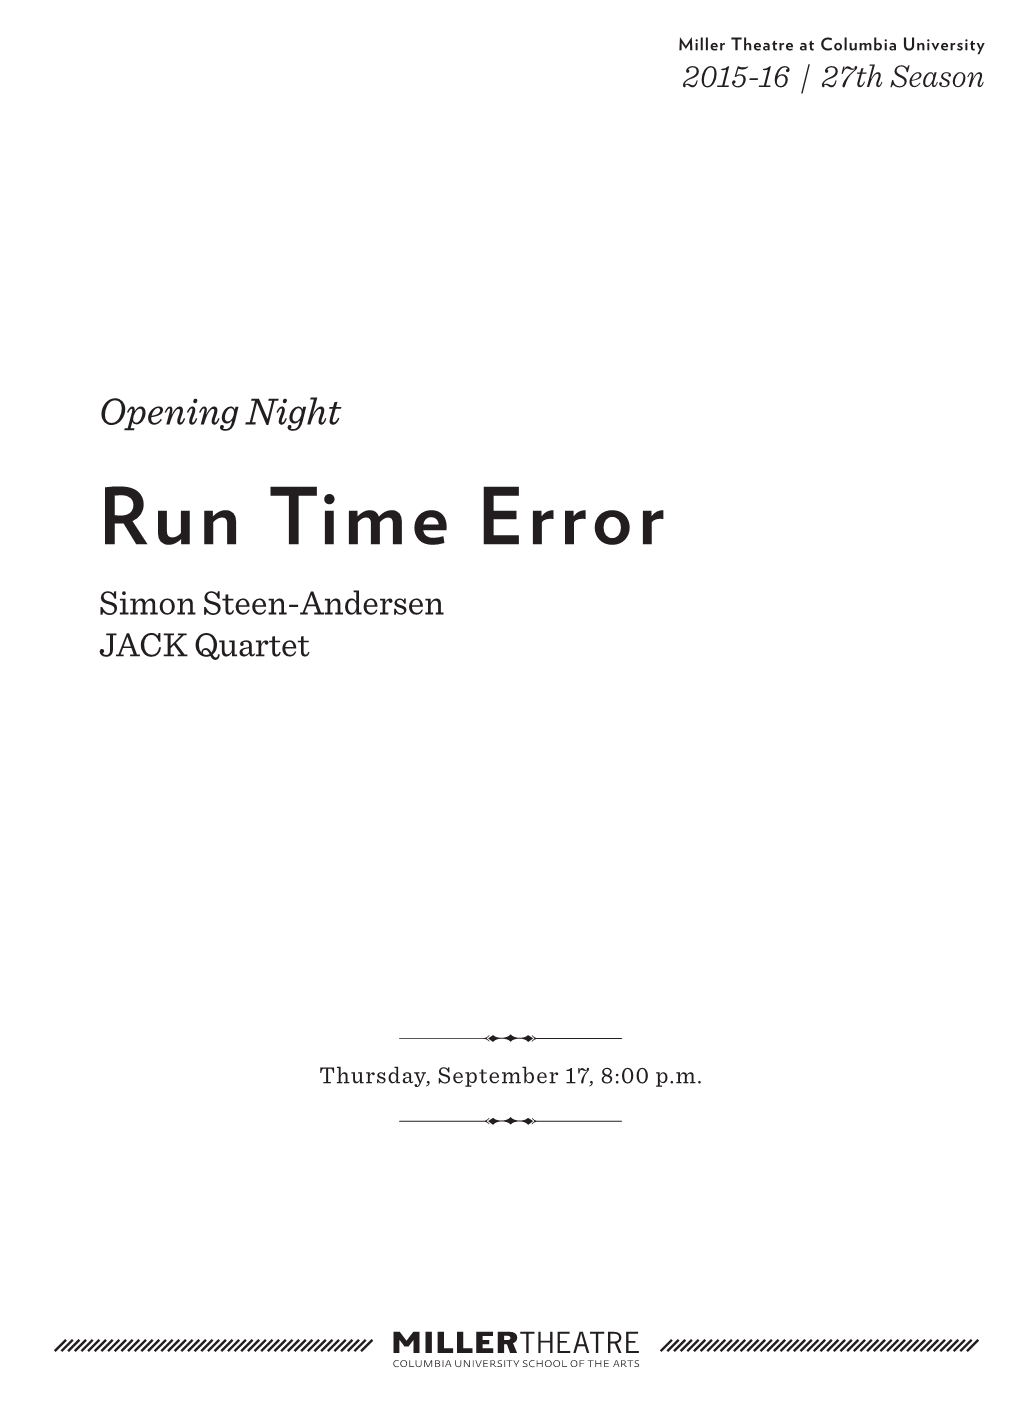 Run Time Error Simon Steen-Andersen JACK Quartet